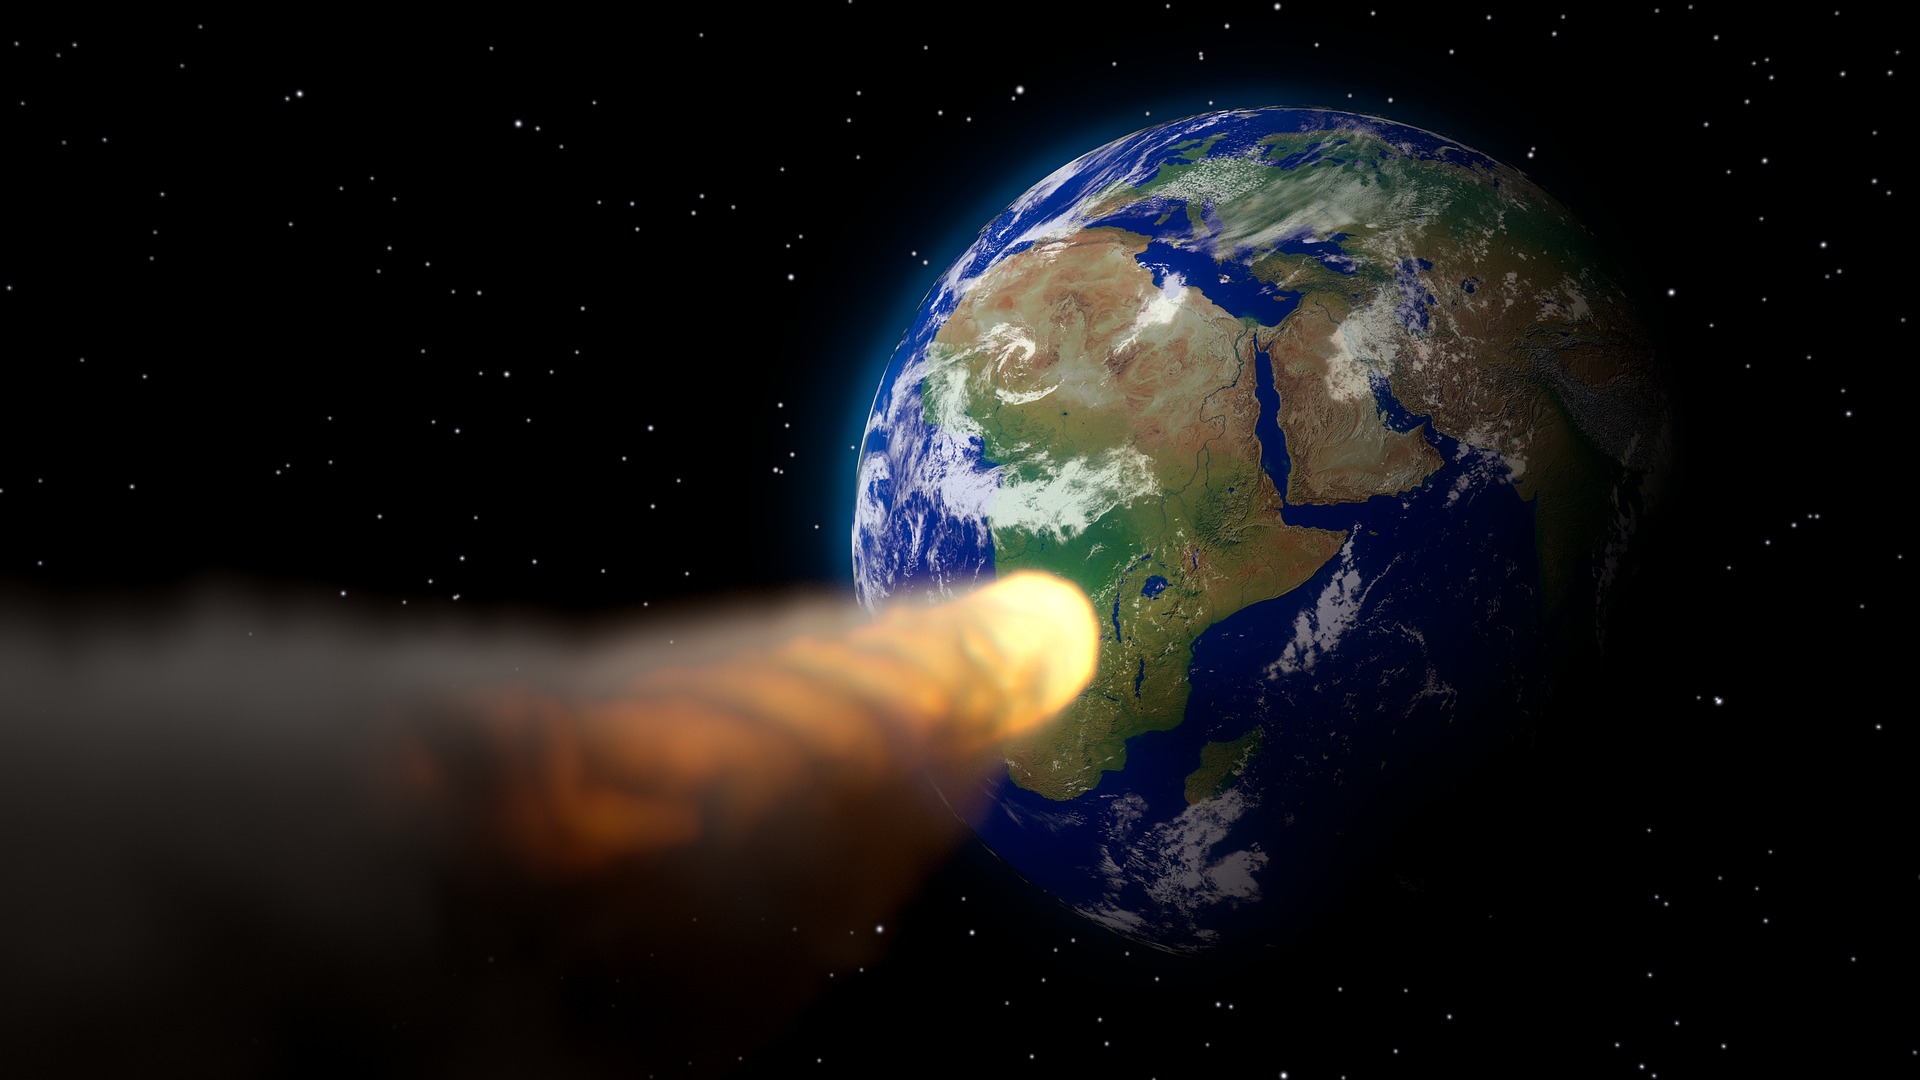 Klimat, Asteroid, Nasa, epidemi, Rymden